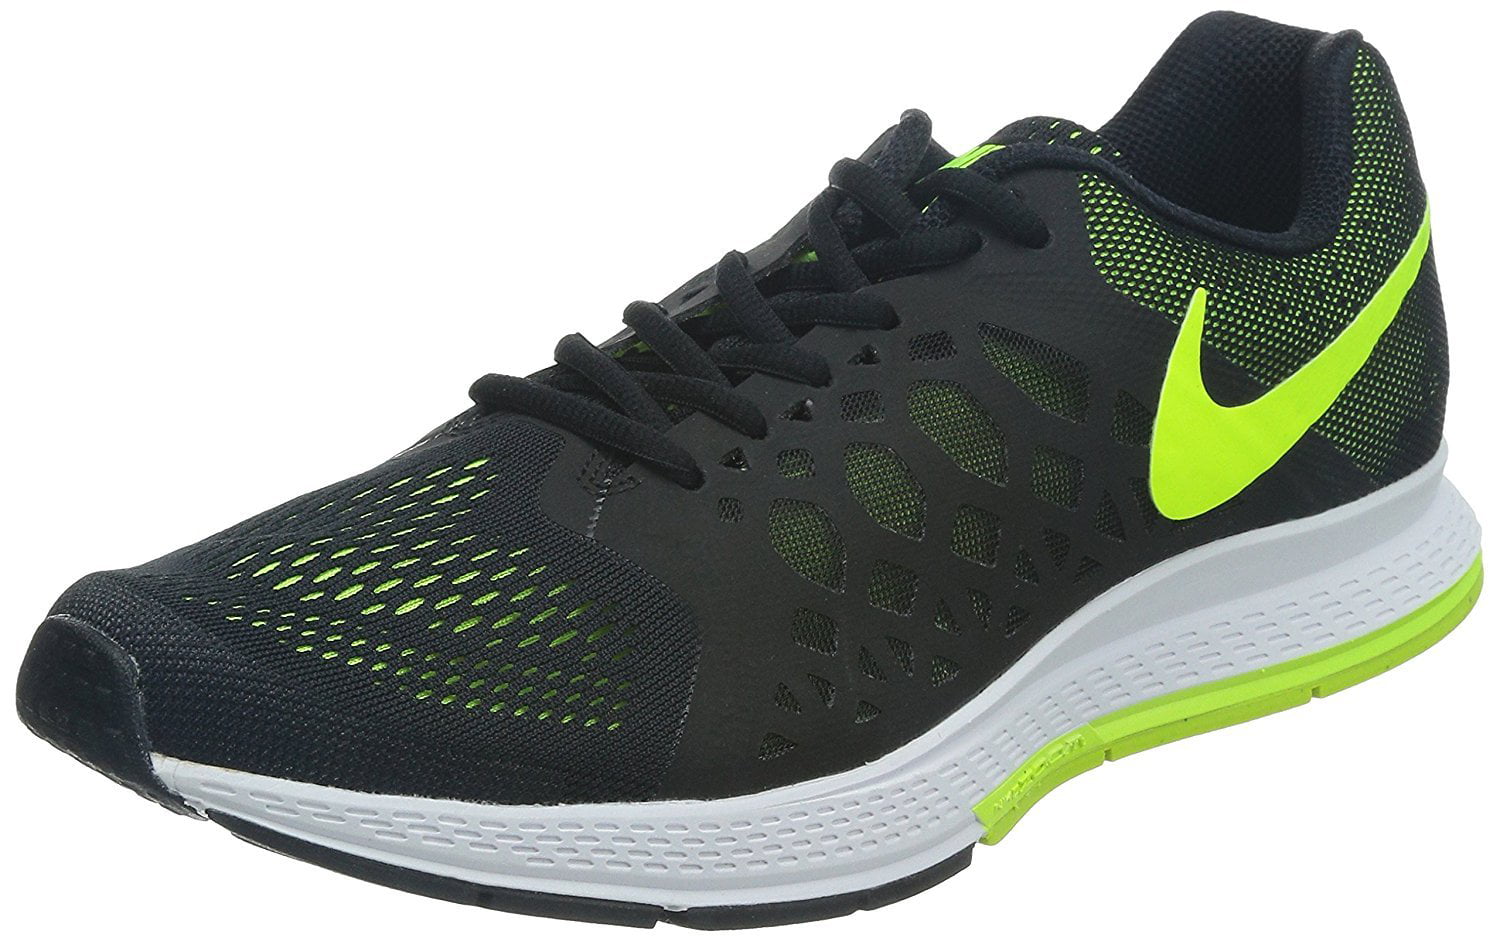 Rebotar Soldado Alianza Nike Men's Air Zoom Pegasus 31 Black/Volt Running Shoe 9.5 Men US -  Walmart.com